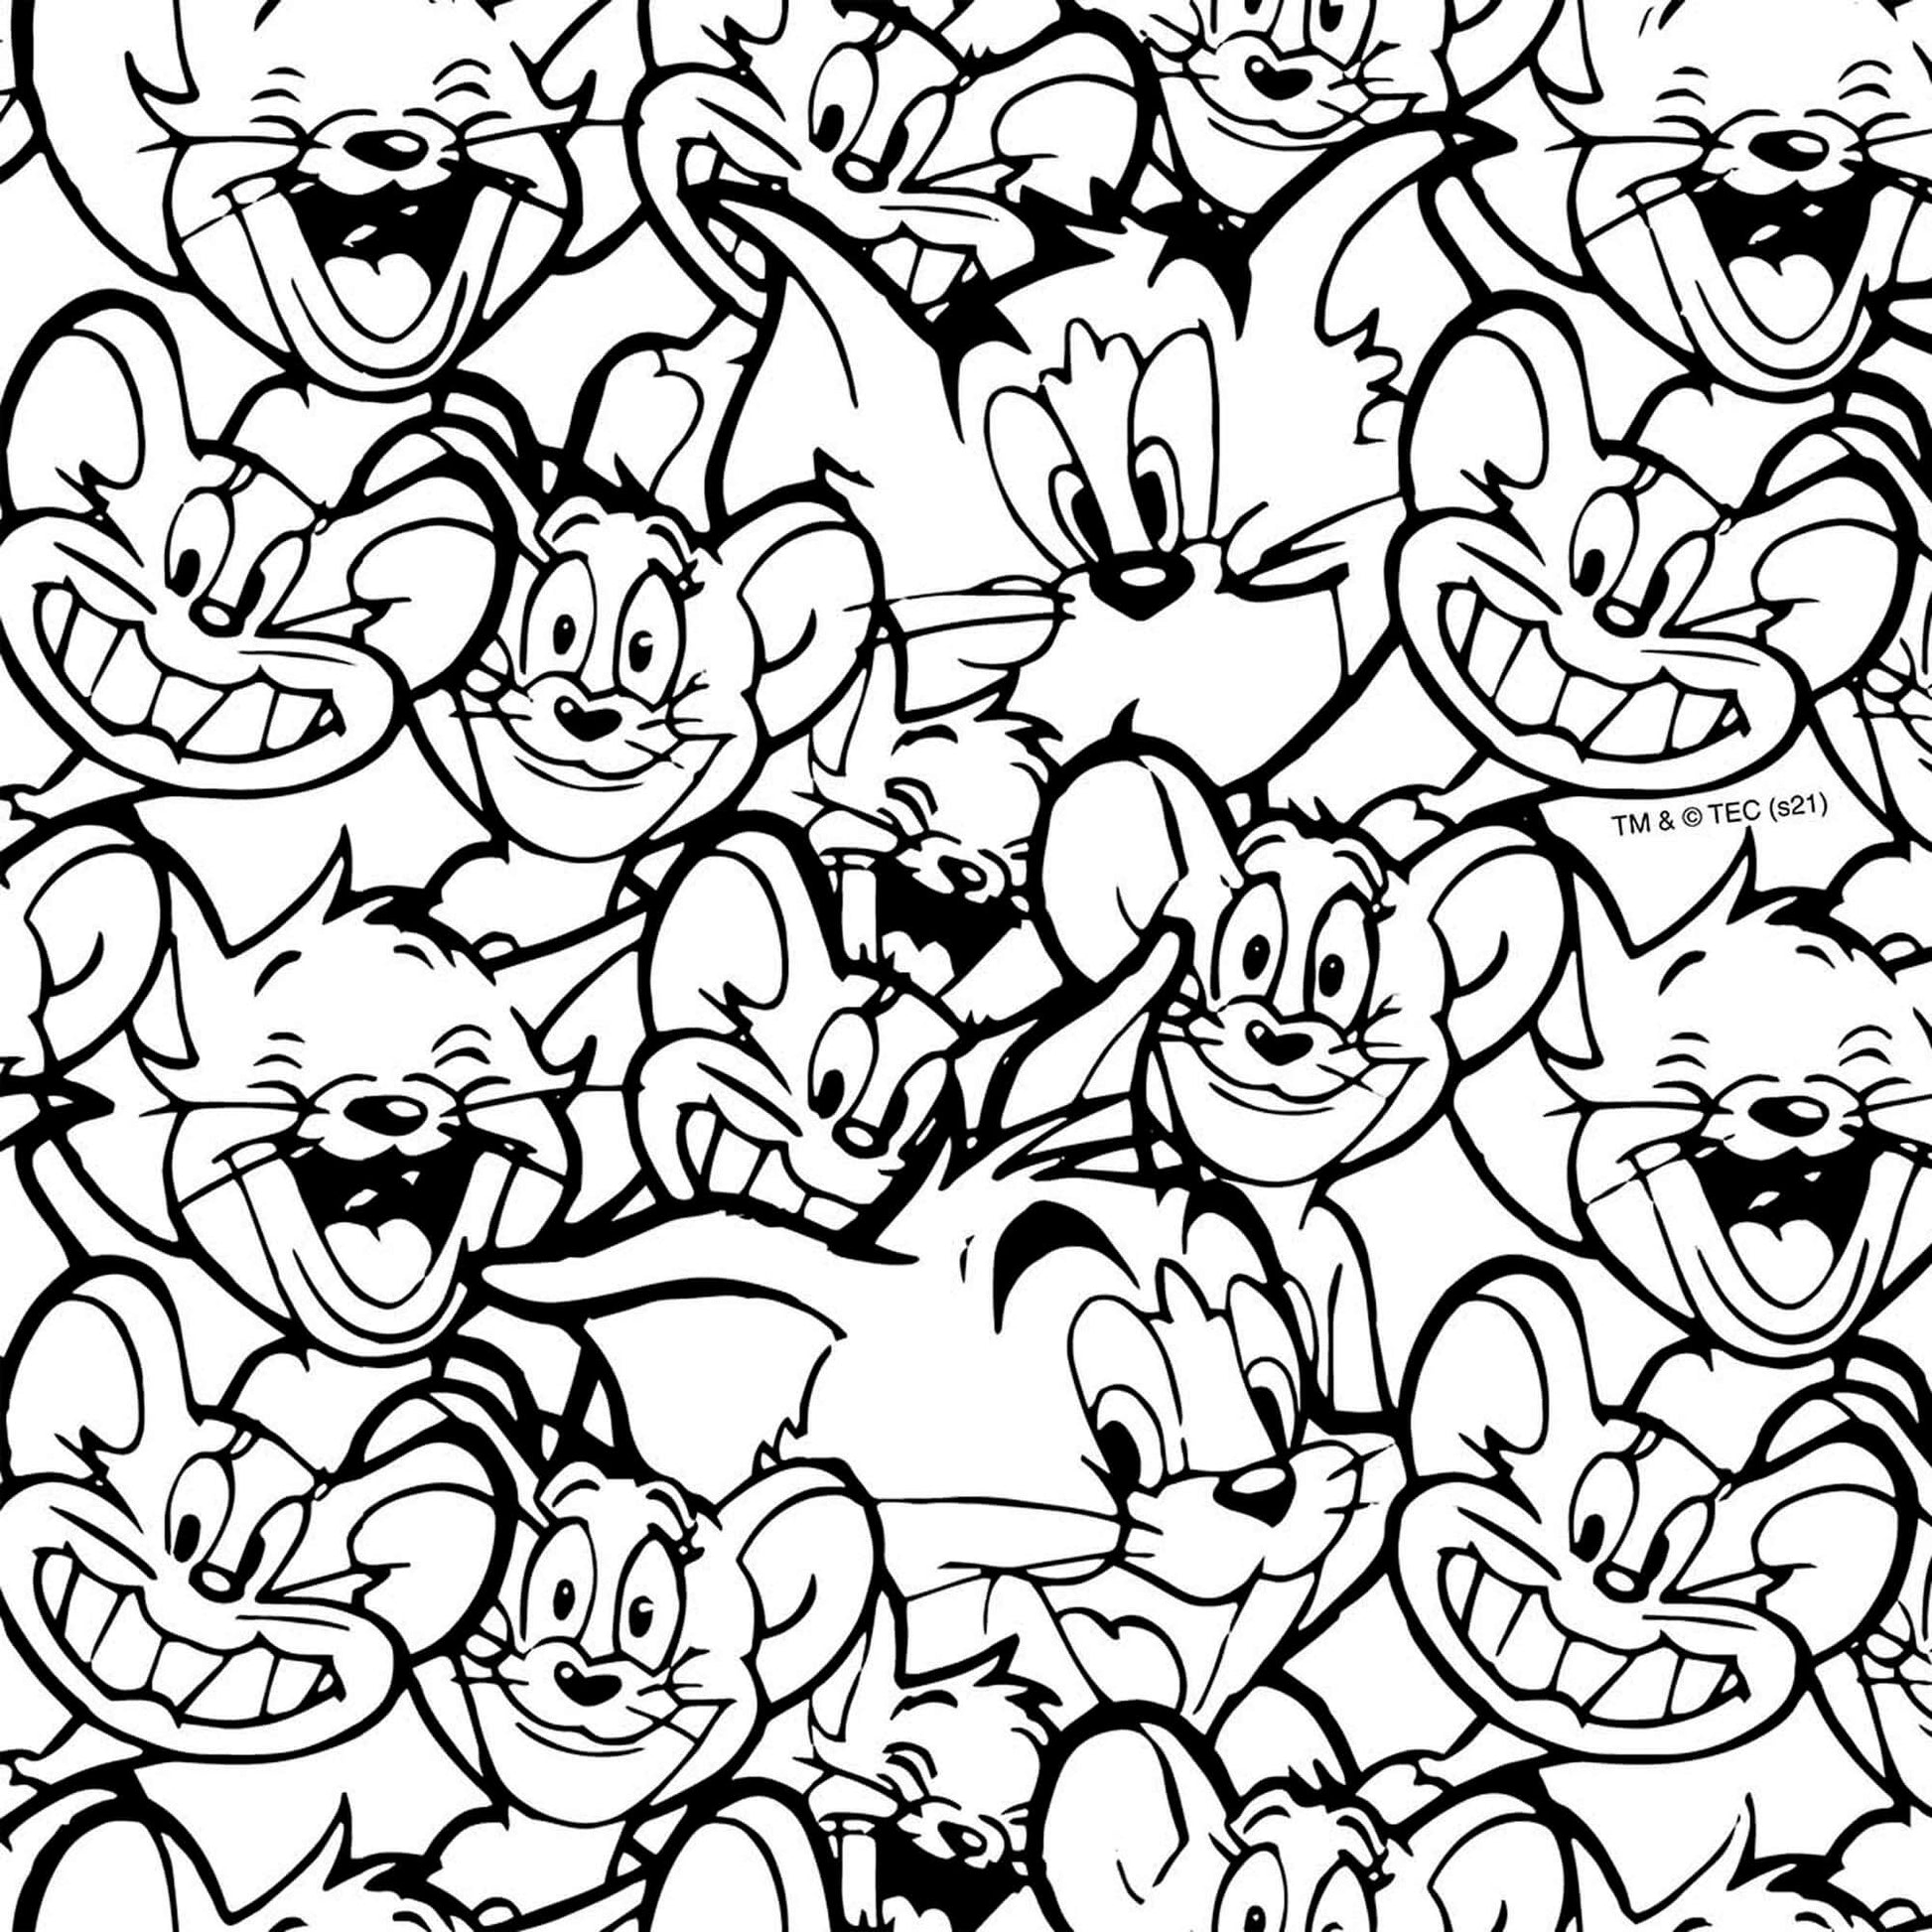 Mantel resinado antimanchas Tom & Jerry 01 4